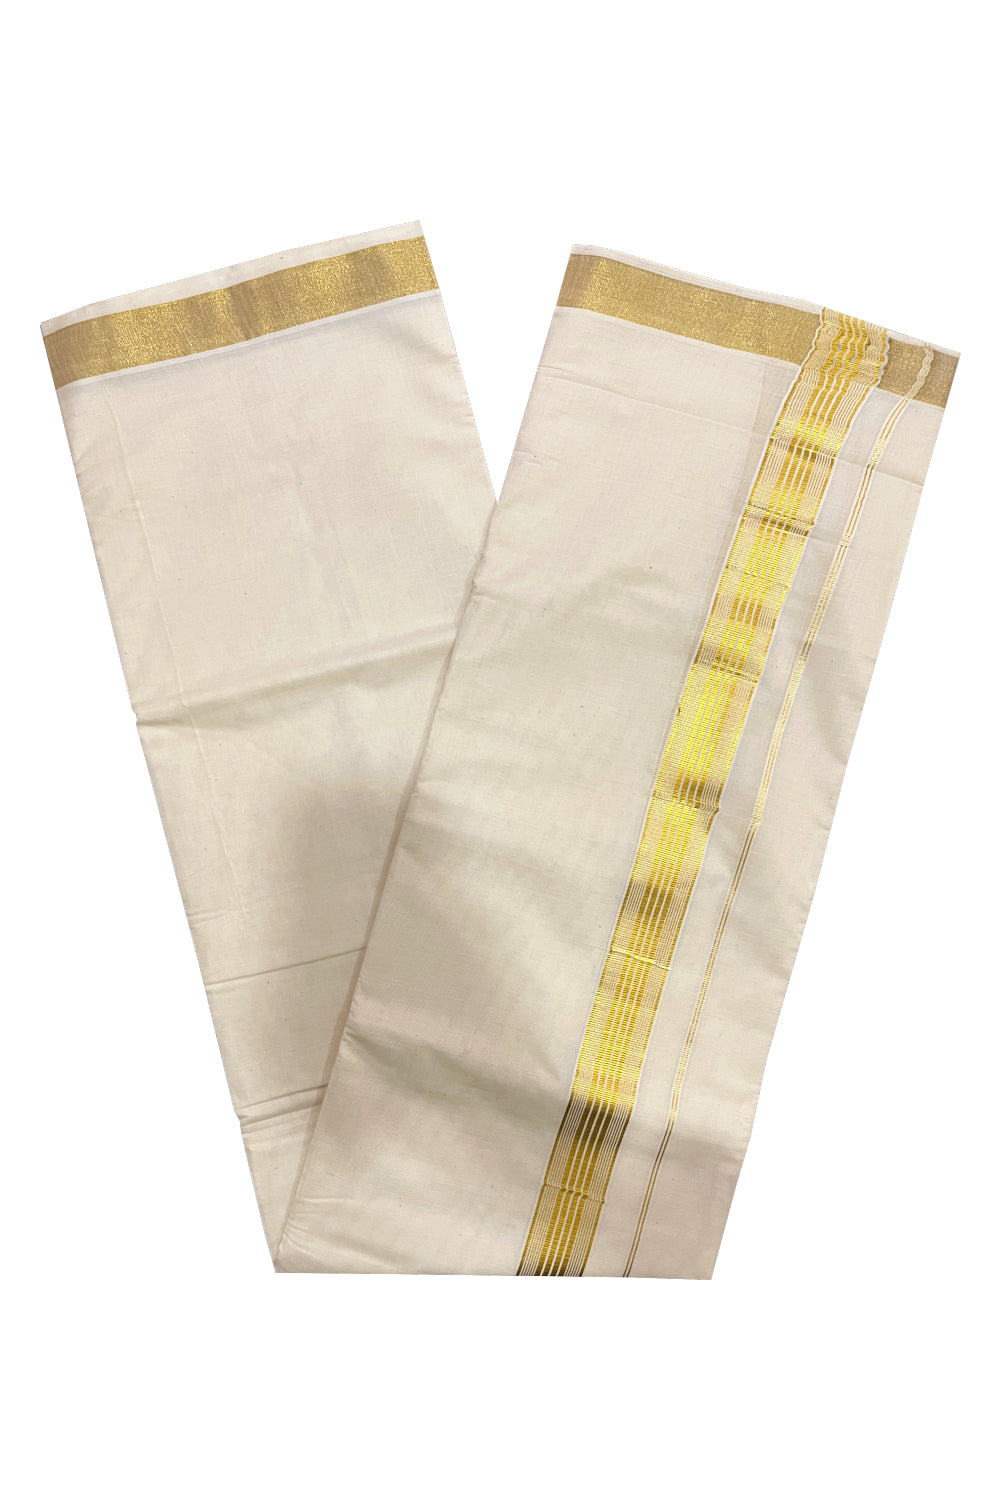 Pure Cotton Double Mundu with Kasavu Line Kara (South Indian Kerala Dhoti)